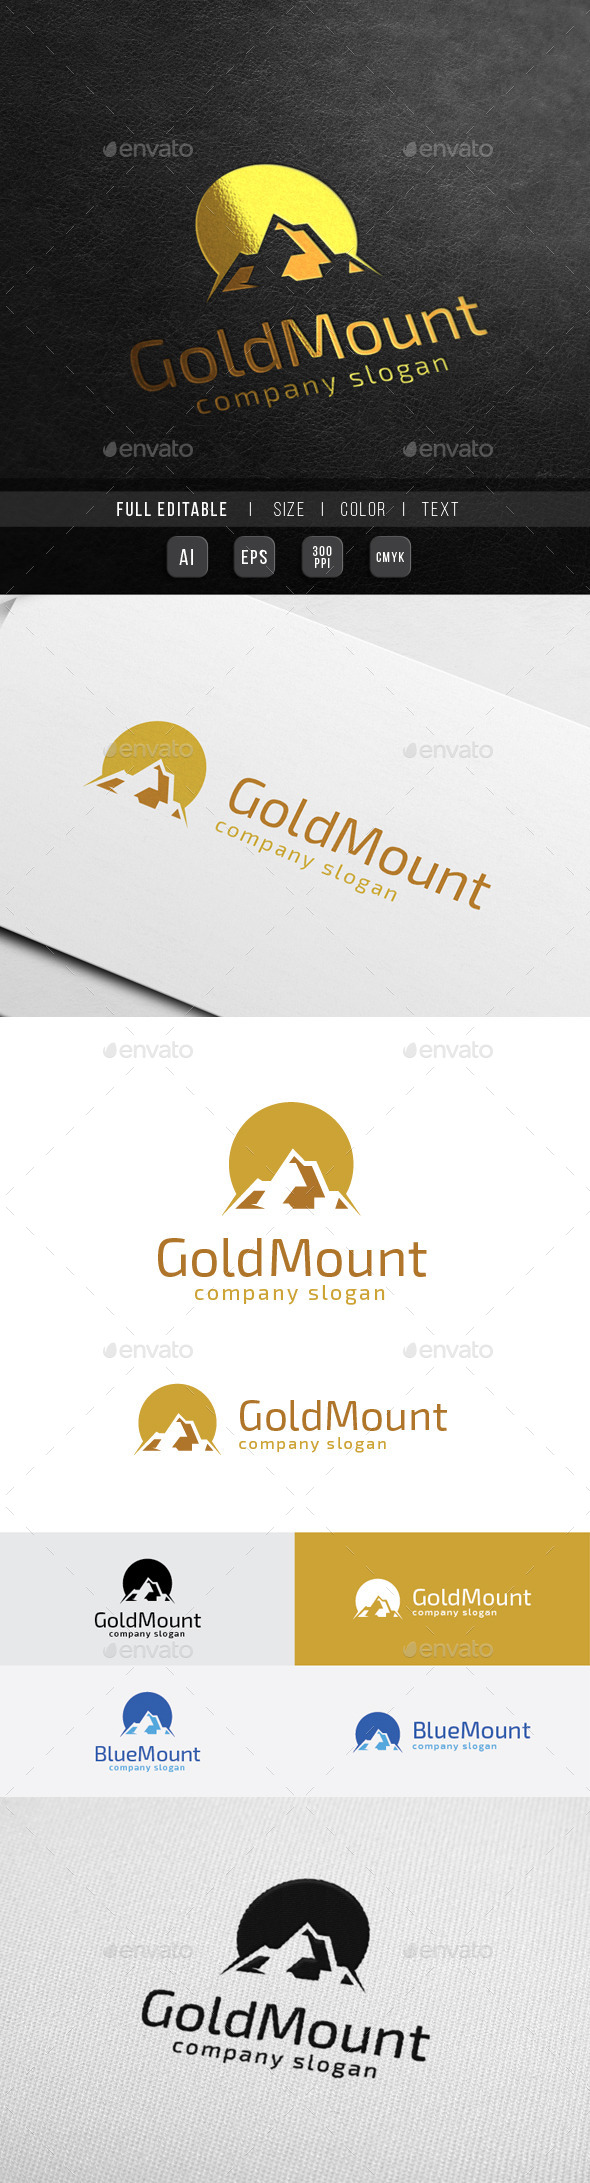 Golden Mountain - Finance Marketing